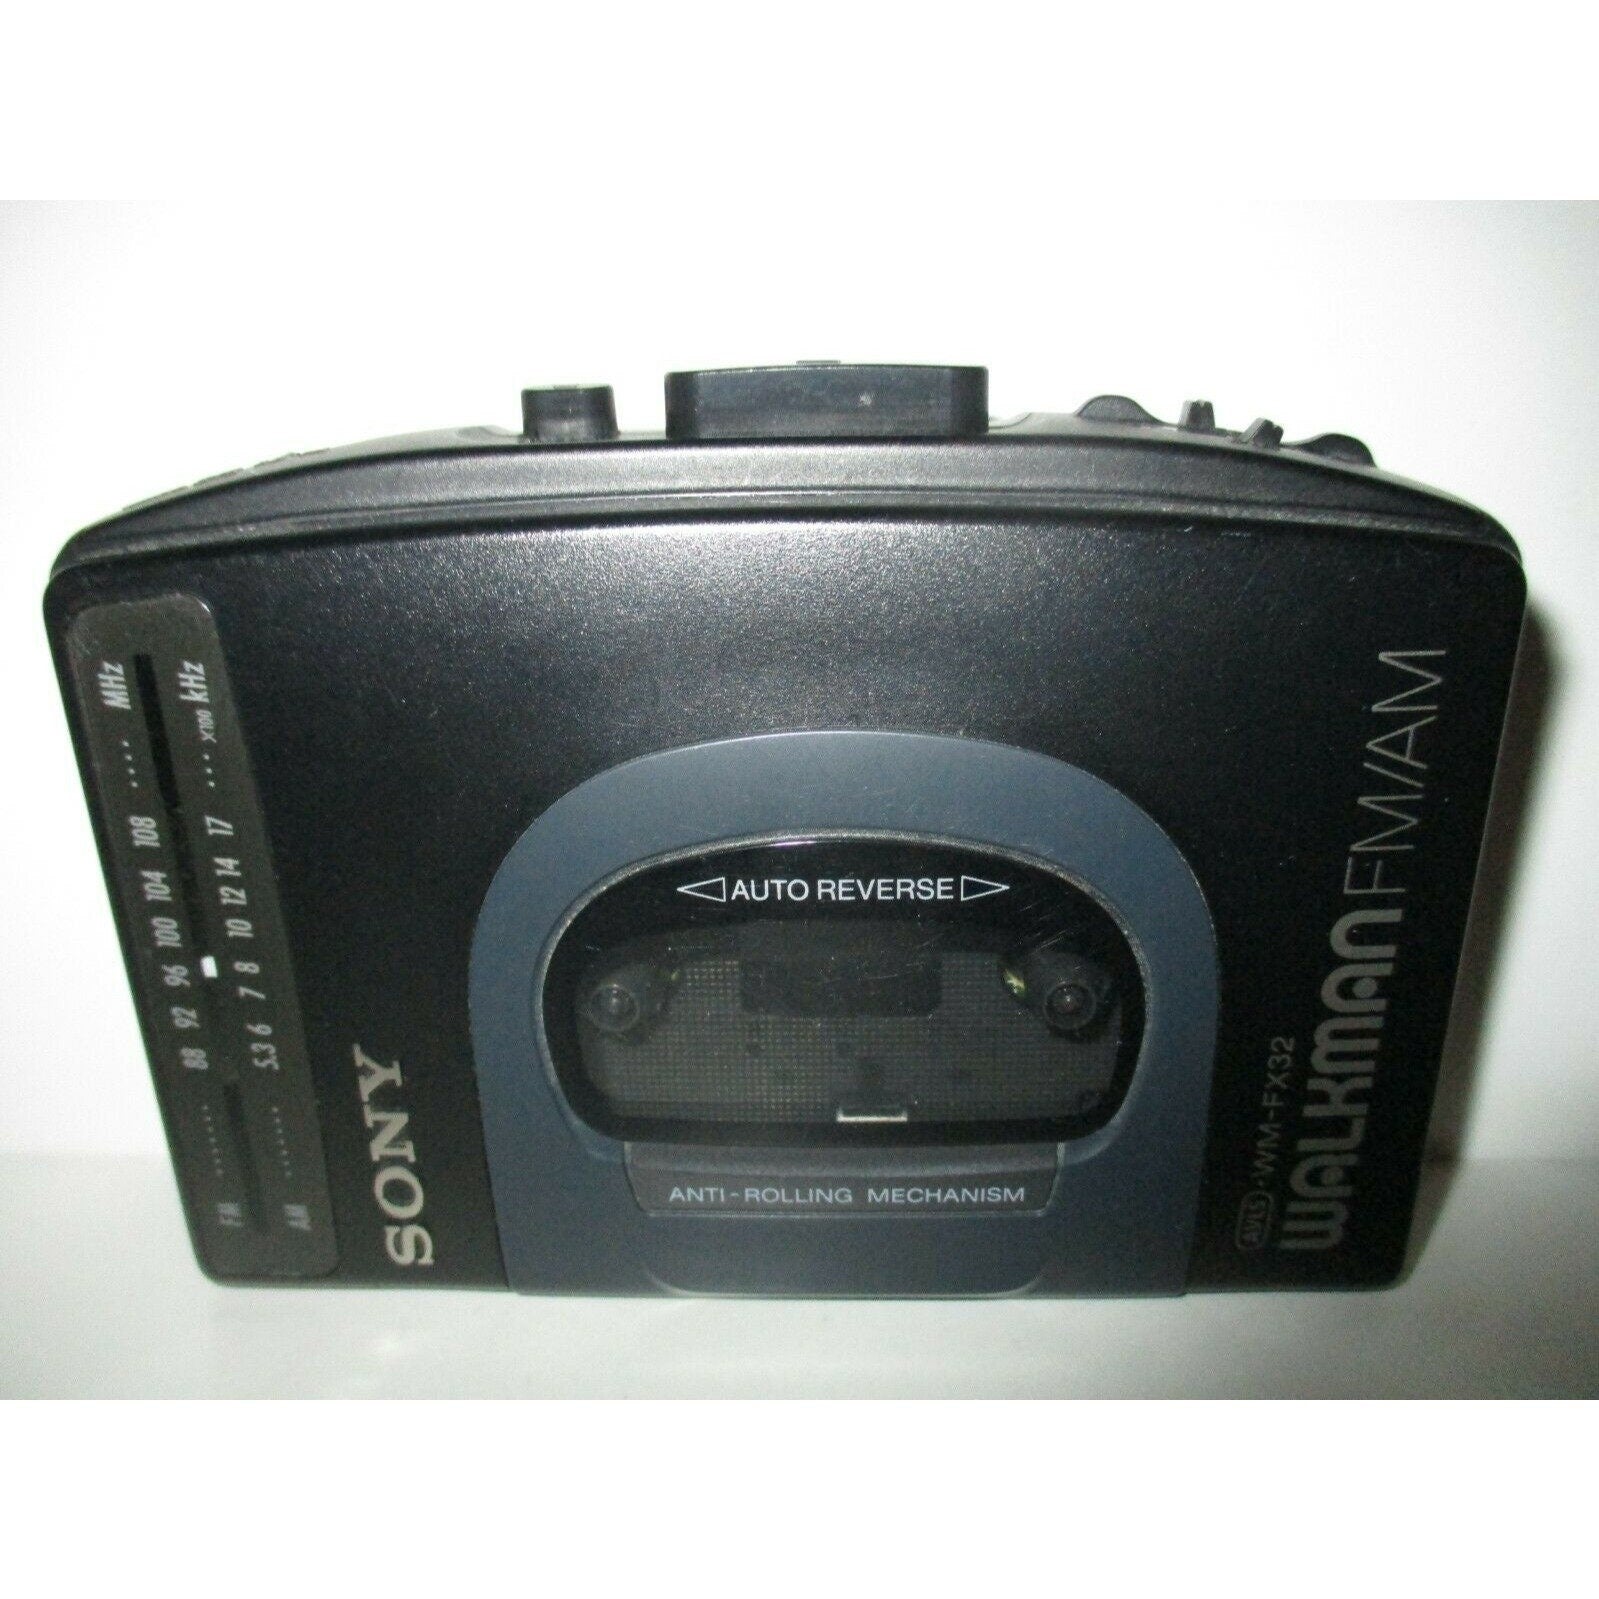 Sony Walkman WM-FX32 FM/AM Stereo Cassette Player